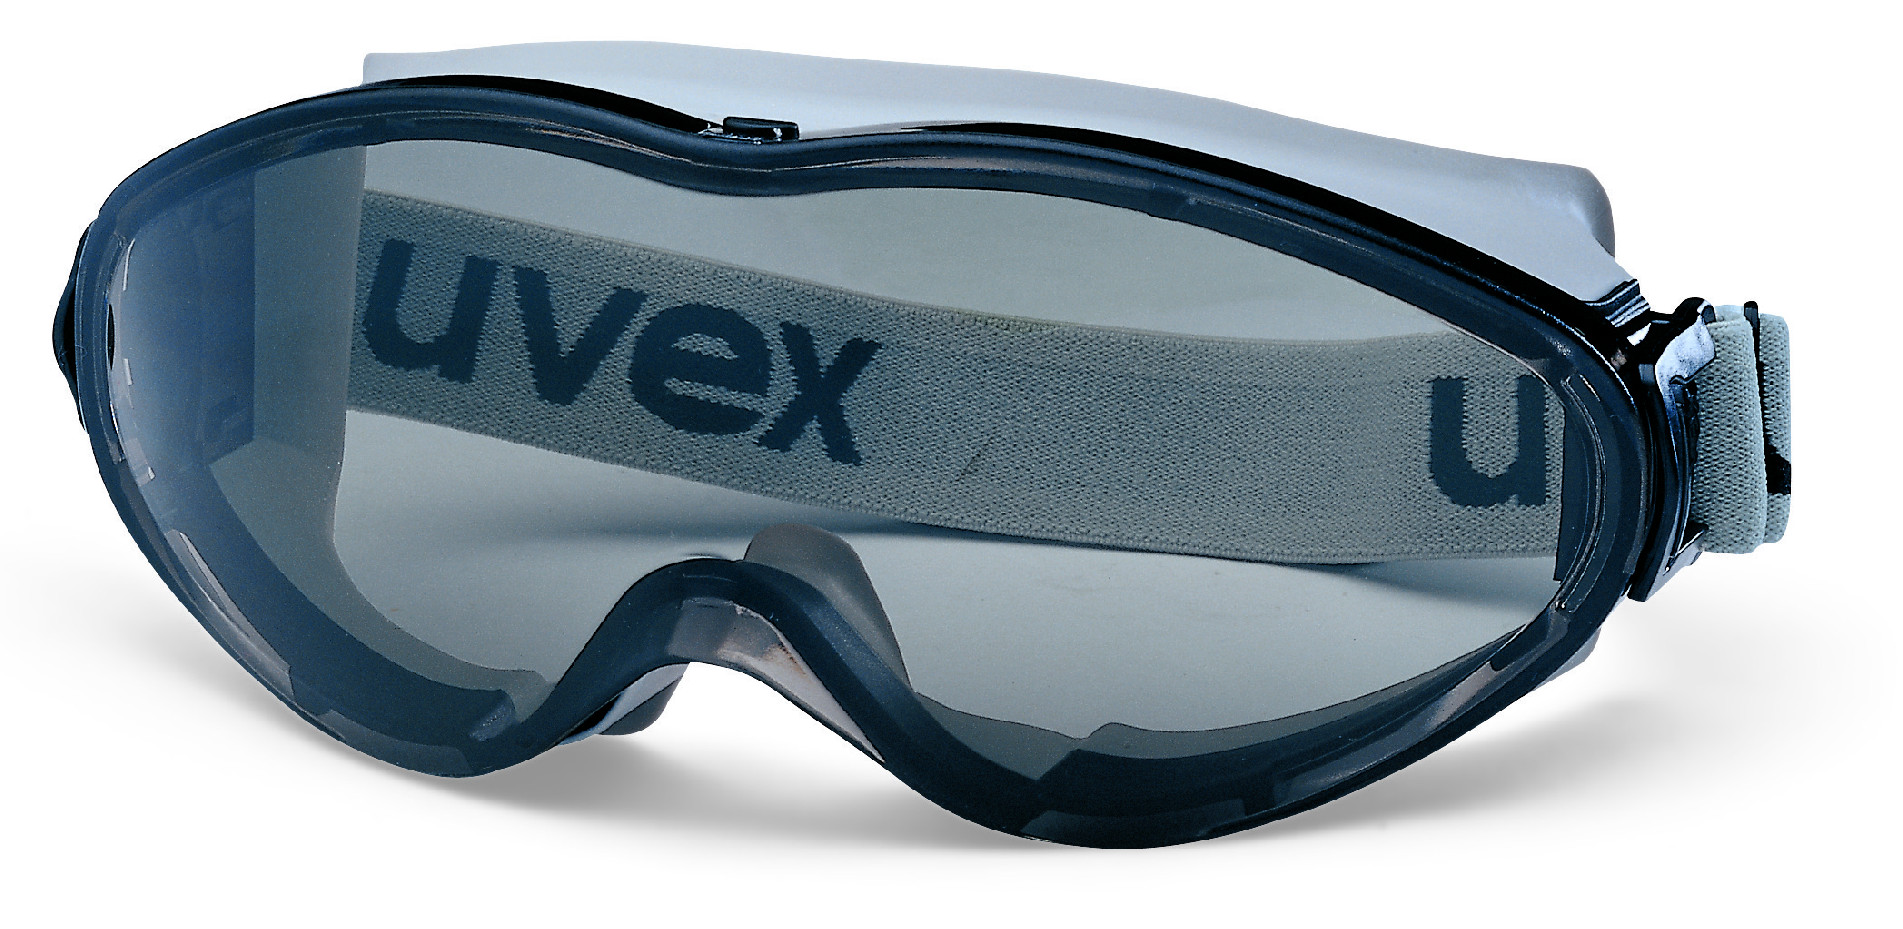 Brýle uvex ultrasonic Kód produktu: 9302286, Provedení zorníku: PC šedý/UV 5-2,5, SV excellence, rám. šedý/černý